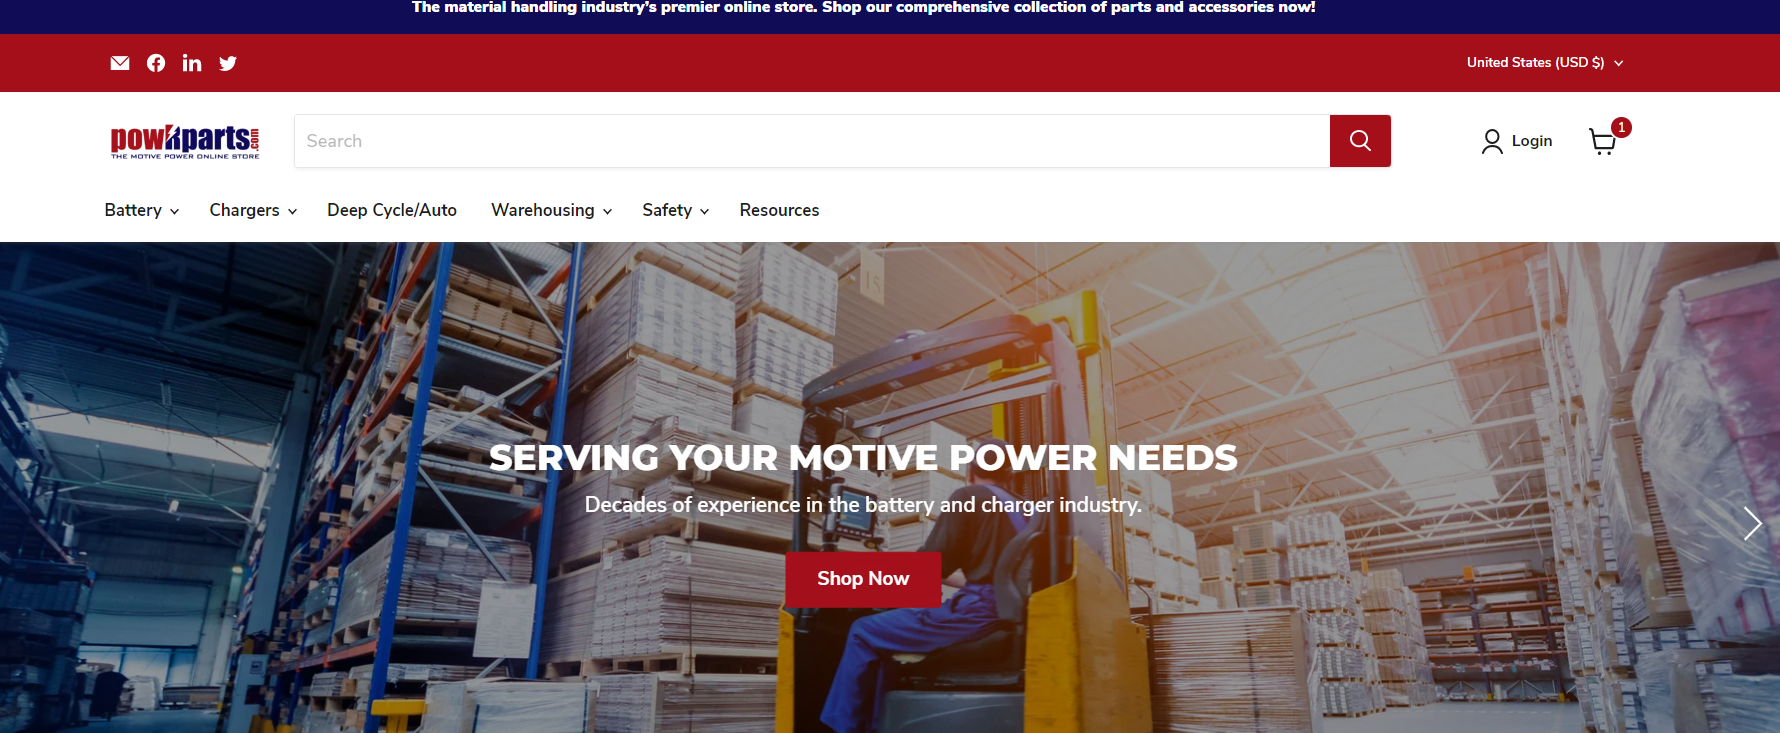 Same Site, New Look: Material Handling's Premier Online Store